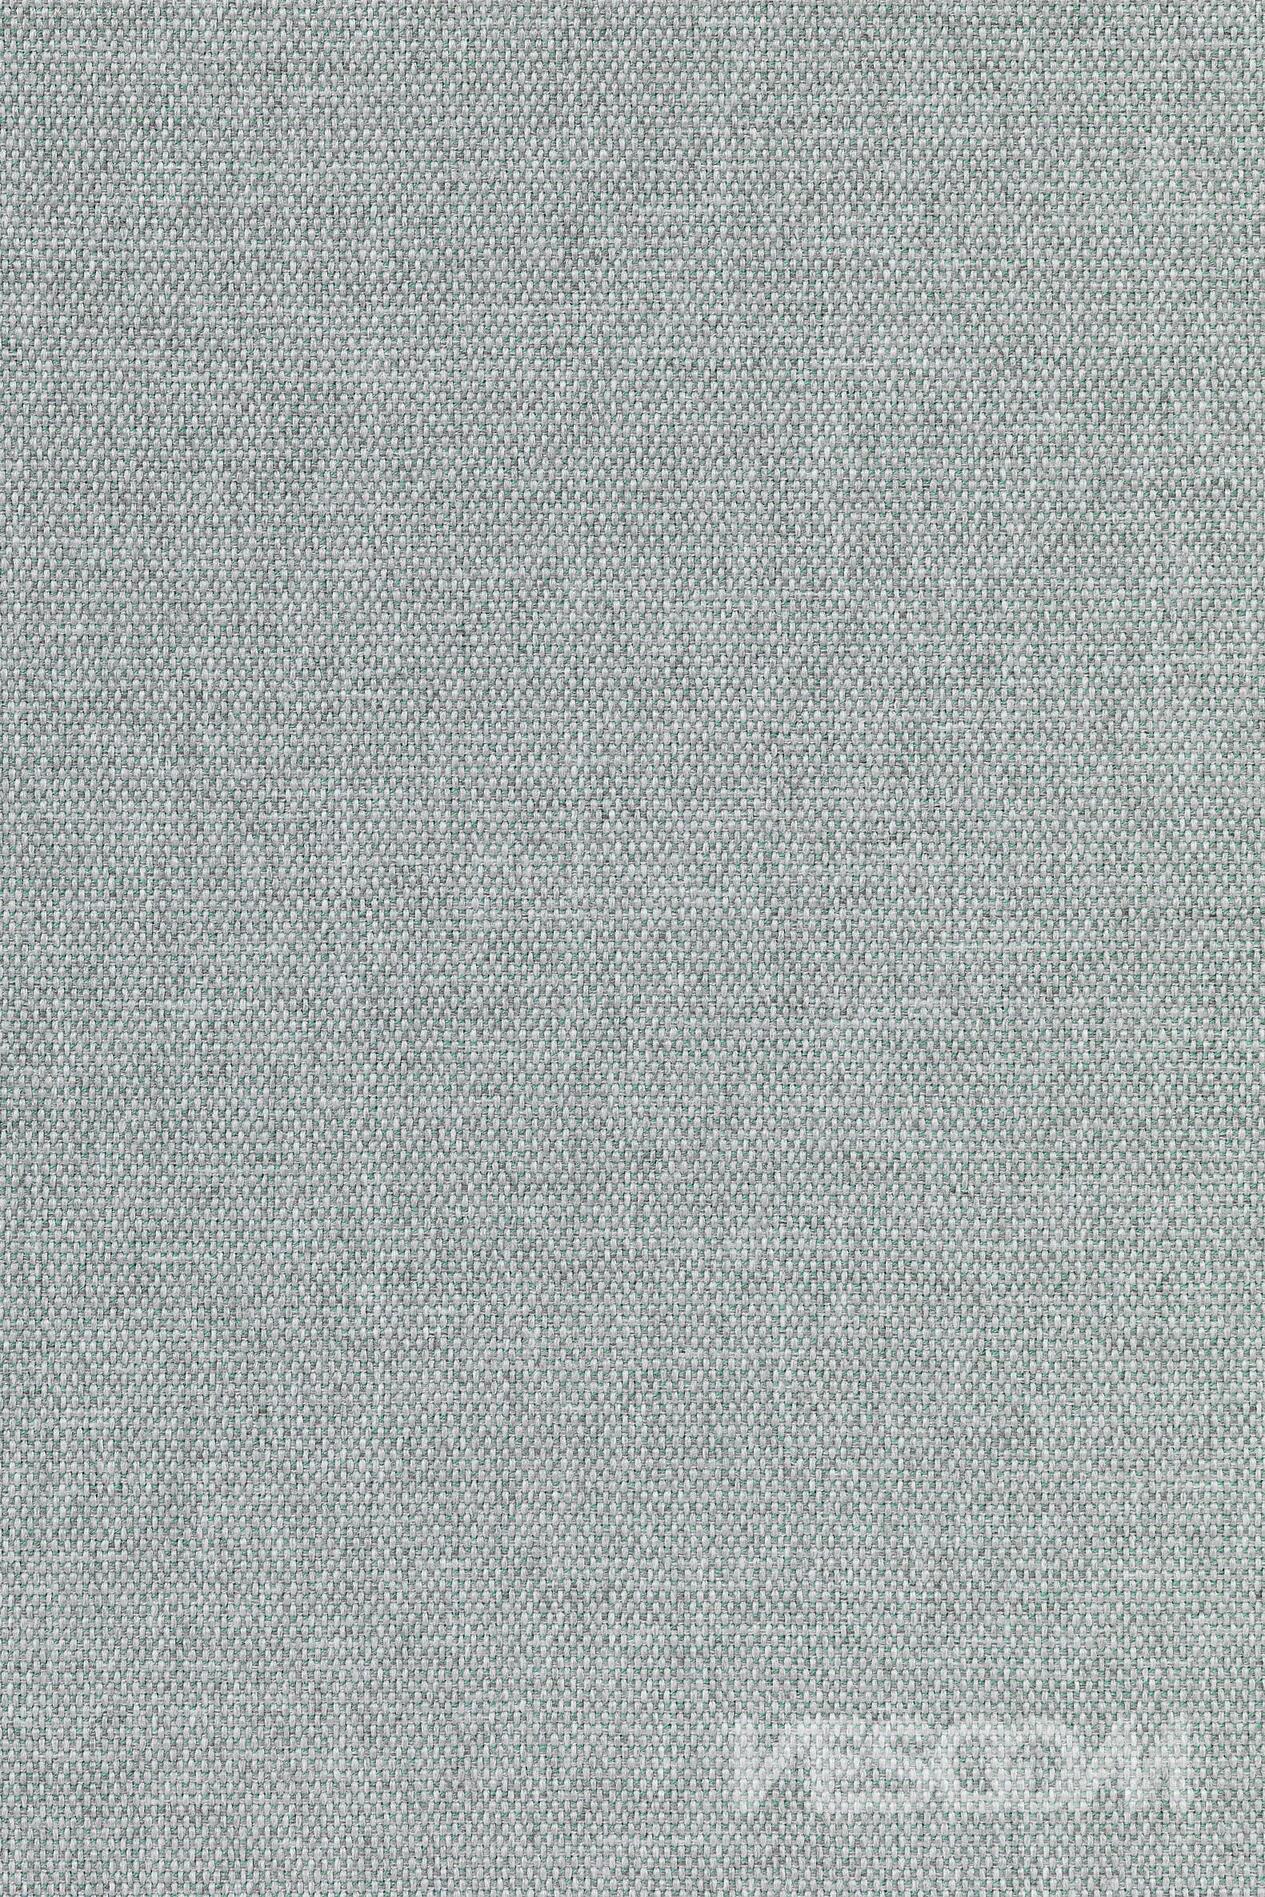 vescom-tula-curtain-fabric-8081-16